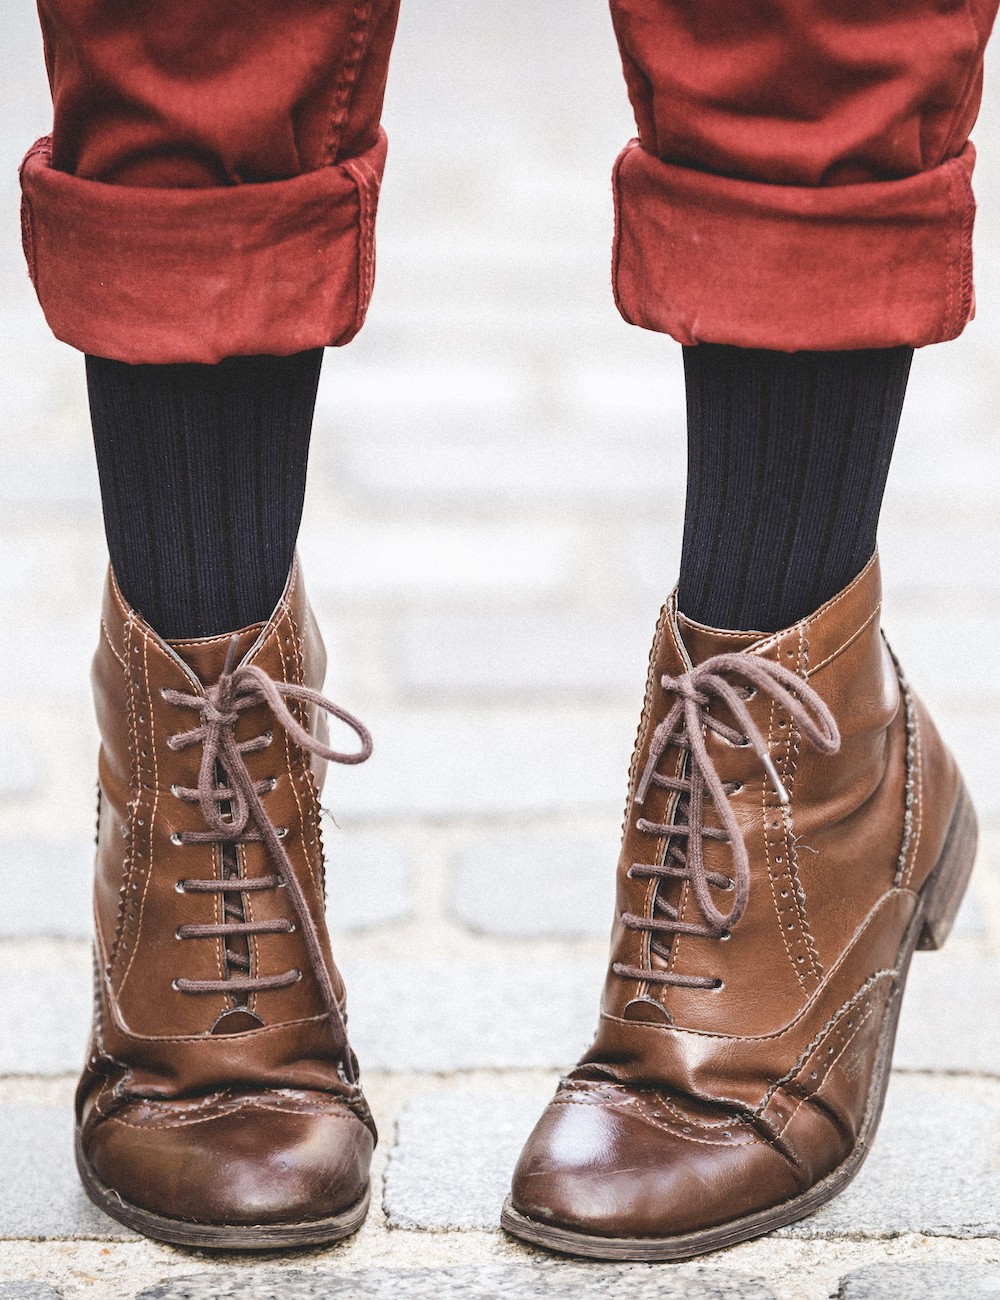 Unisex support socks - tired, heavy or swollen legs, Take me to New-York noir